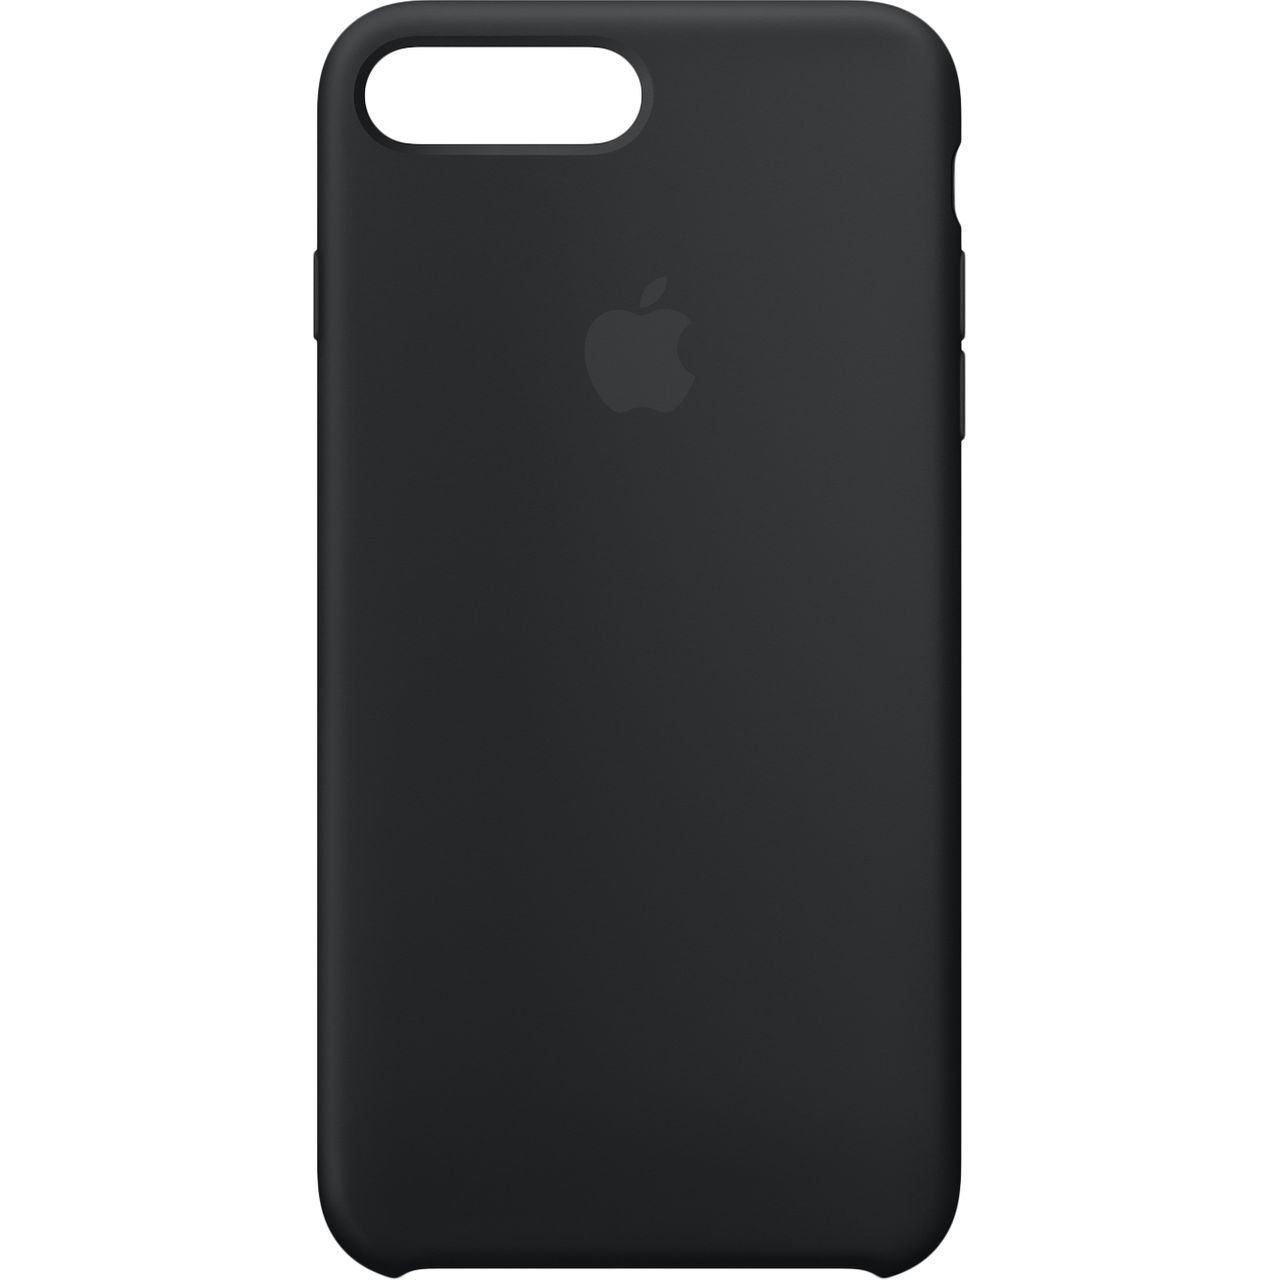 Apple iPhone 8 Plus / 7 Plus Silicone Case Review